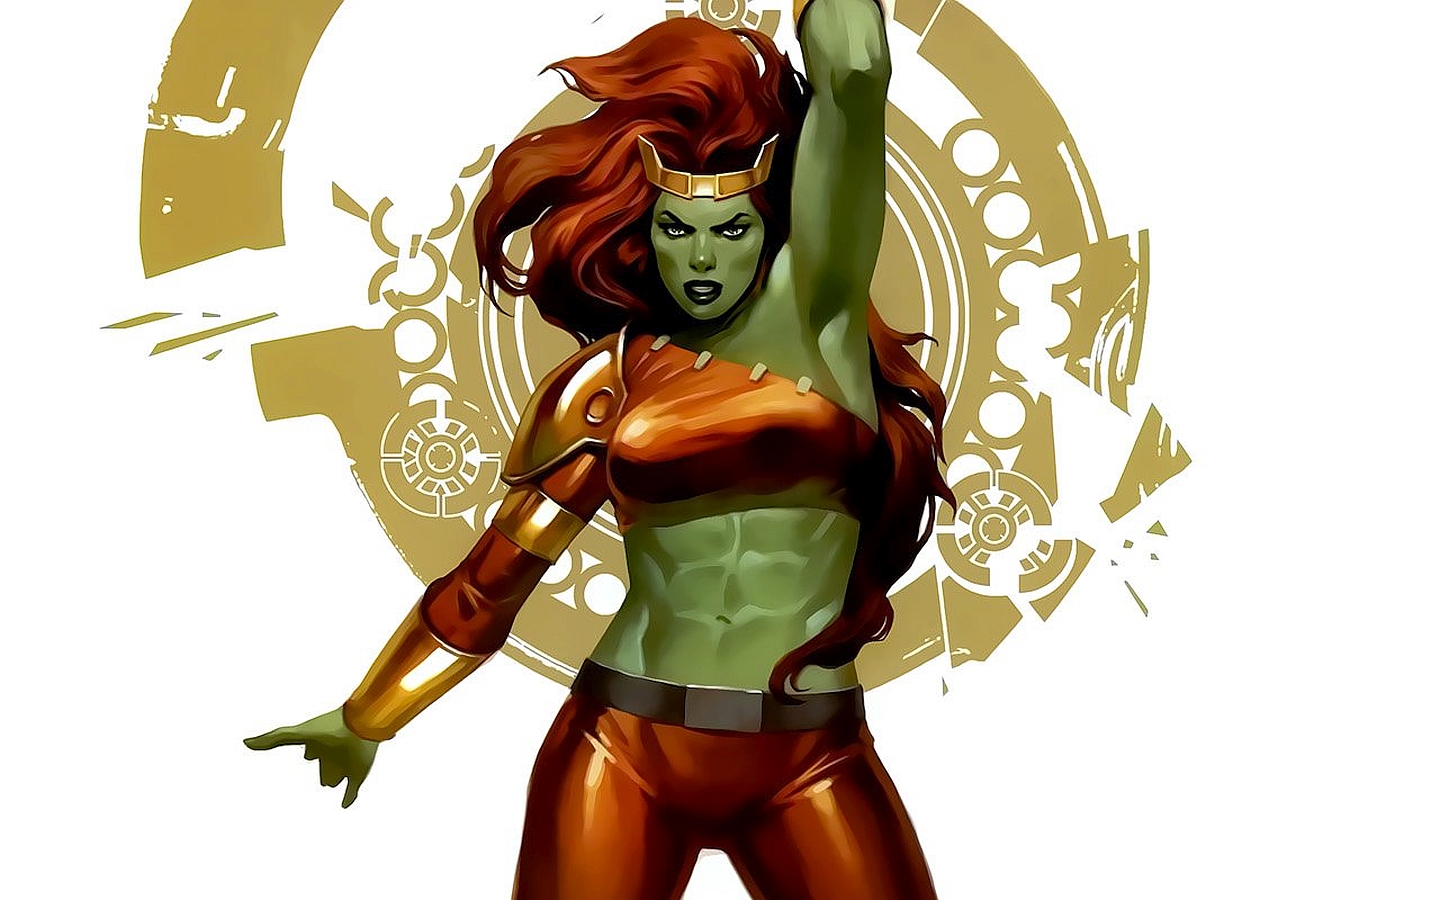 savage she-hulk Picture